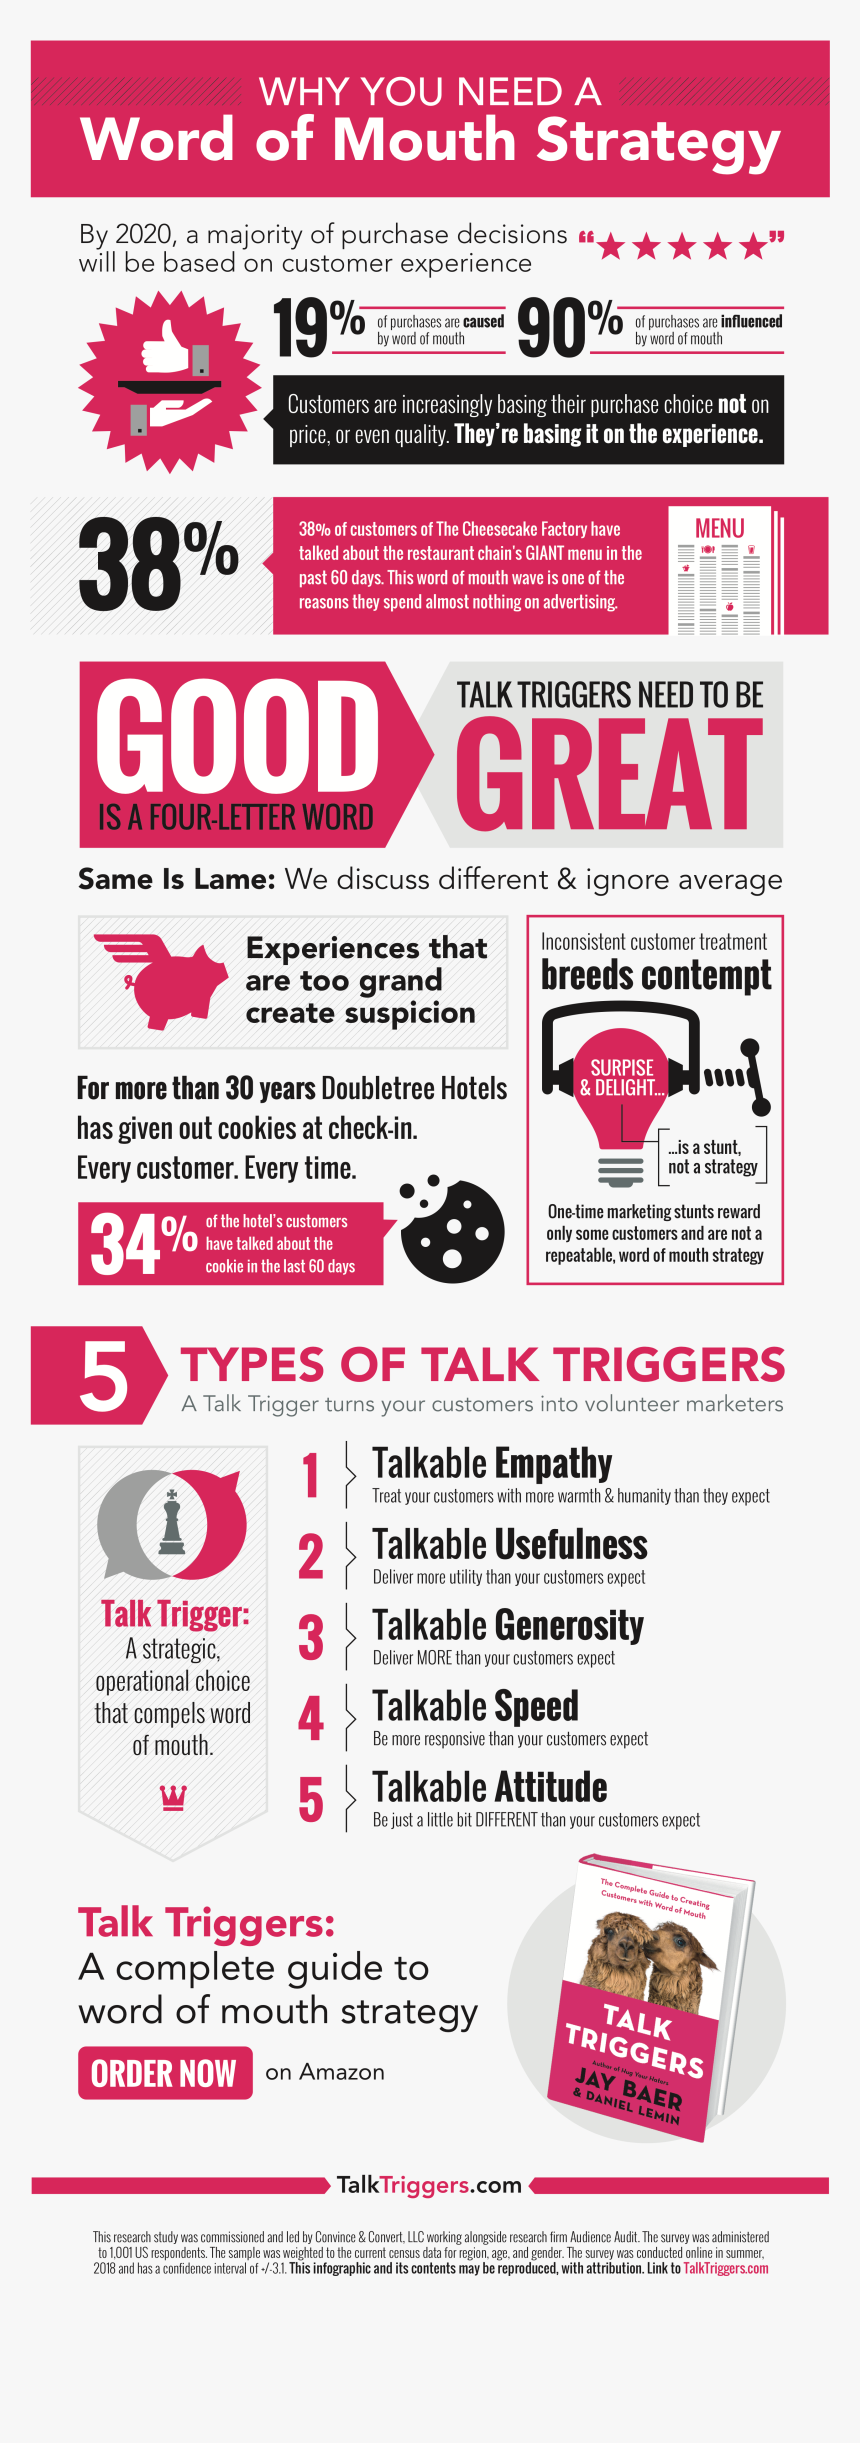 Talktriggers Infographic - Talk Triggers, HD Png Download, Free Download